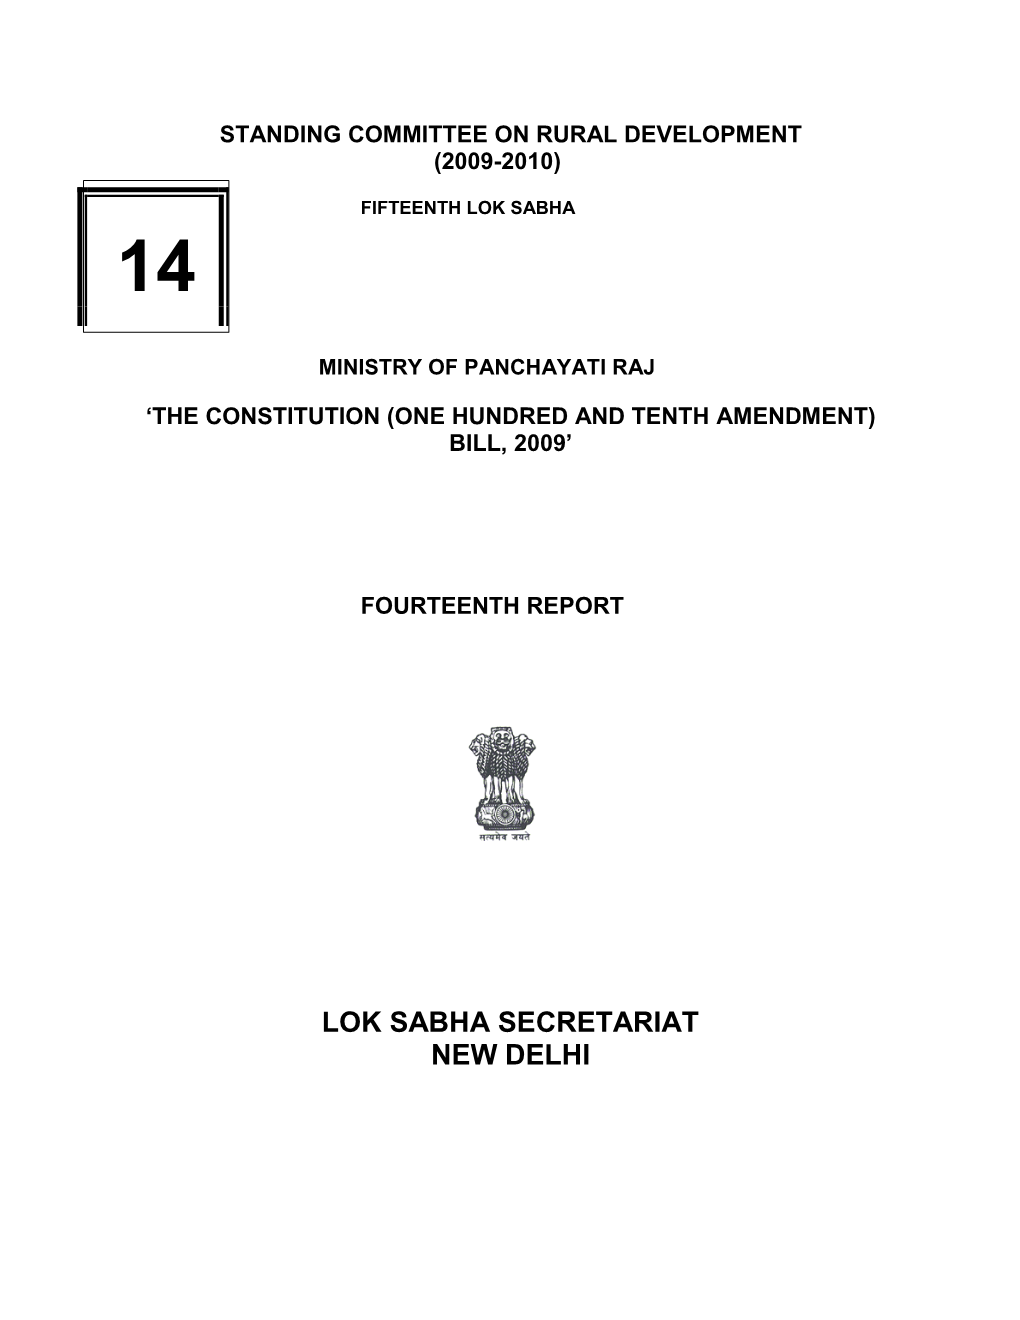 Lok Sabha Secretariat New Delhi Fourteenth Report